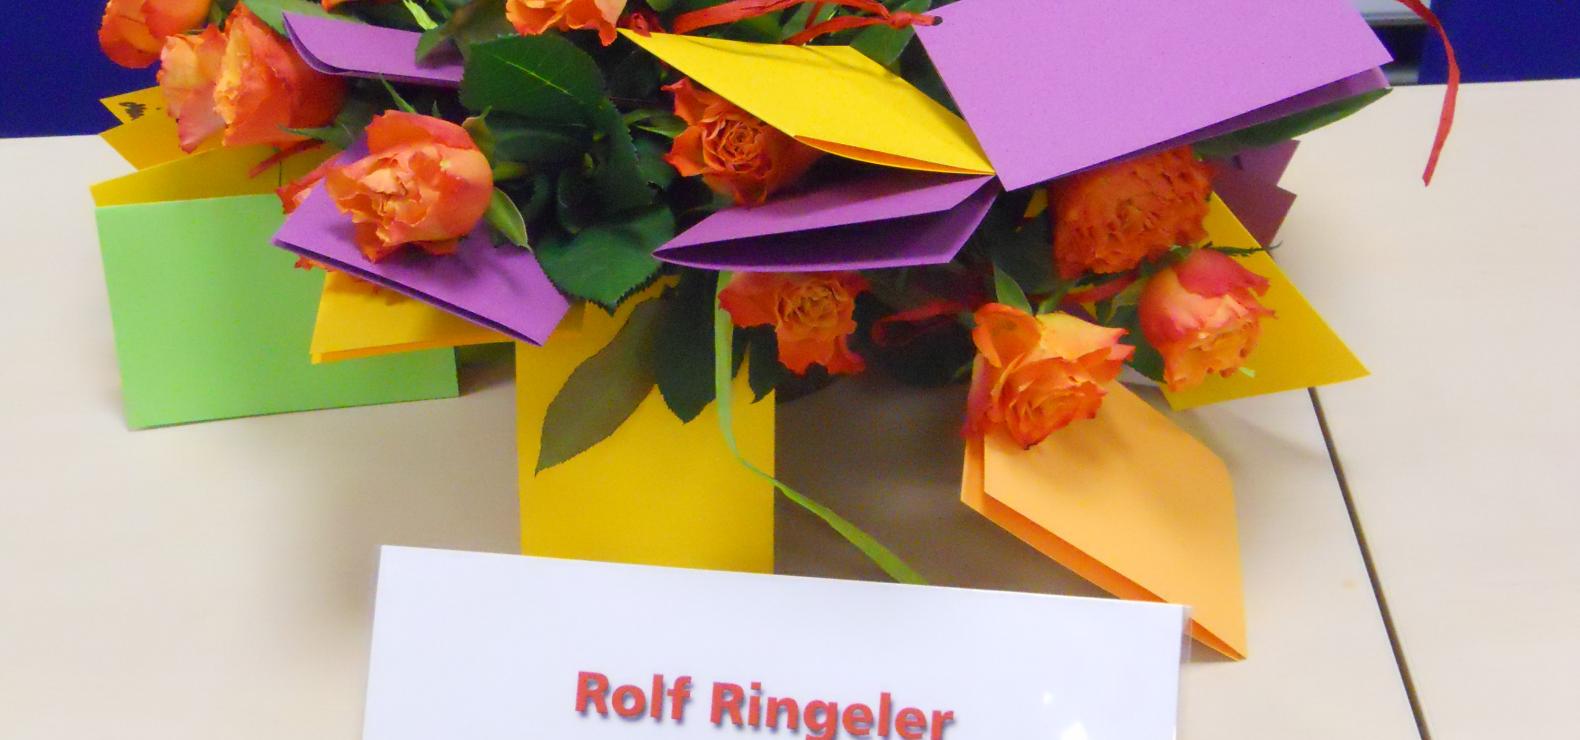 Rolf Ringelers leerer Platz